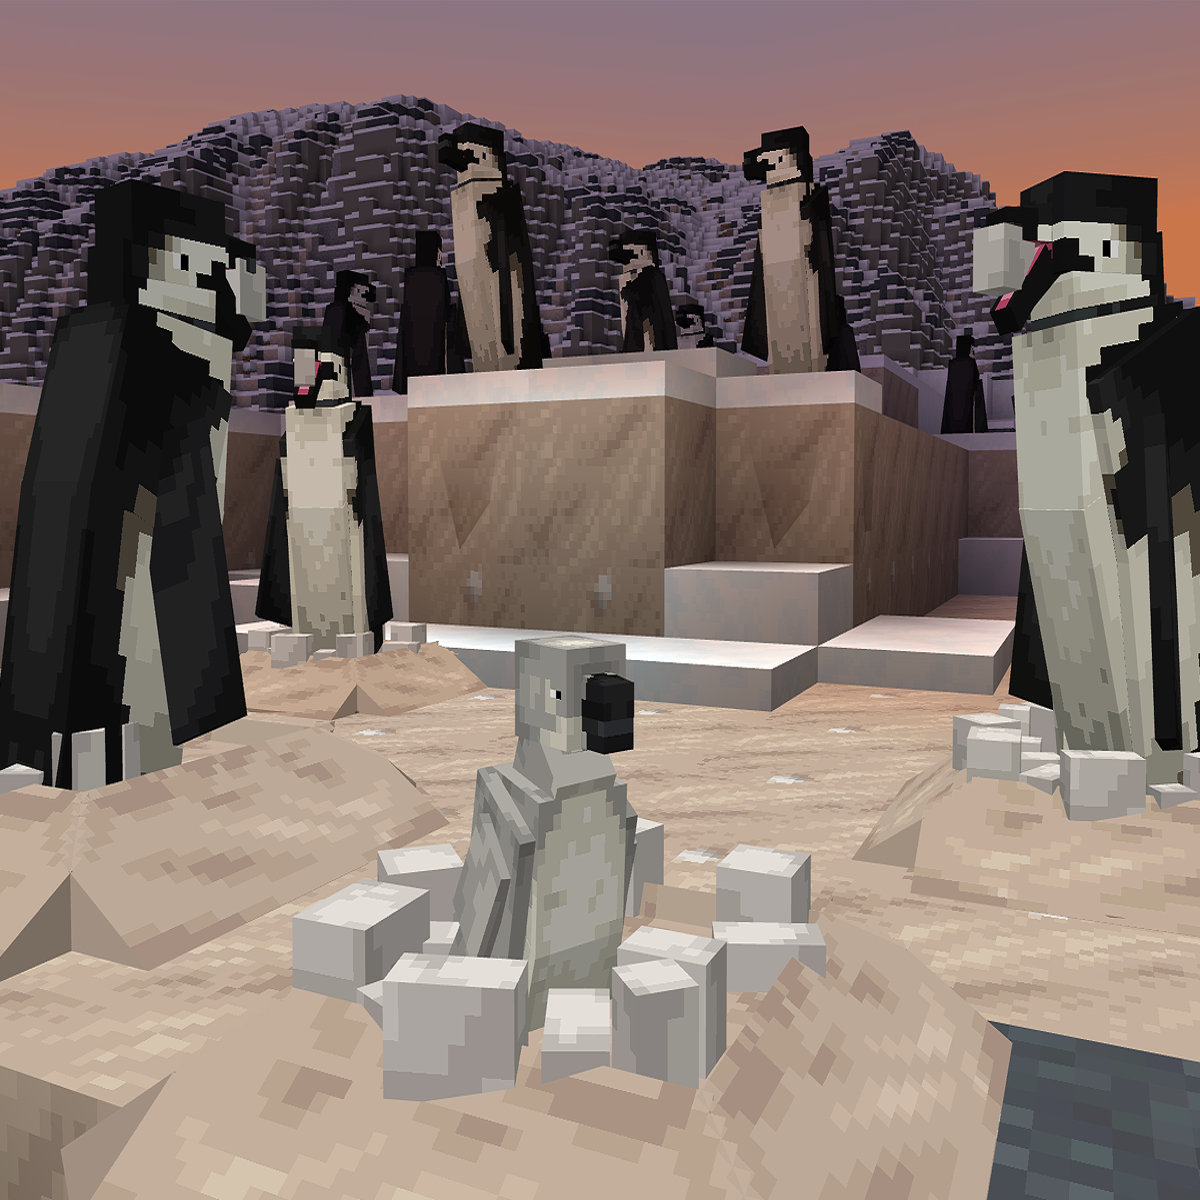 Minecraft Live 2023: New mob vote and updates on their way - BBC Newsround